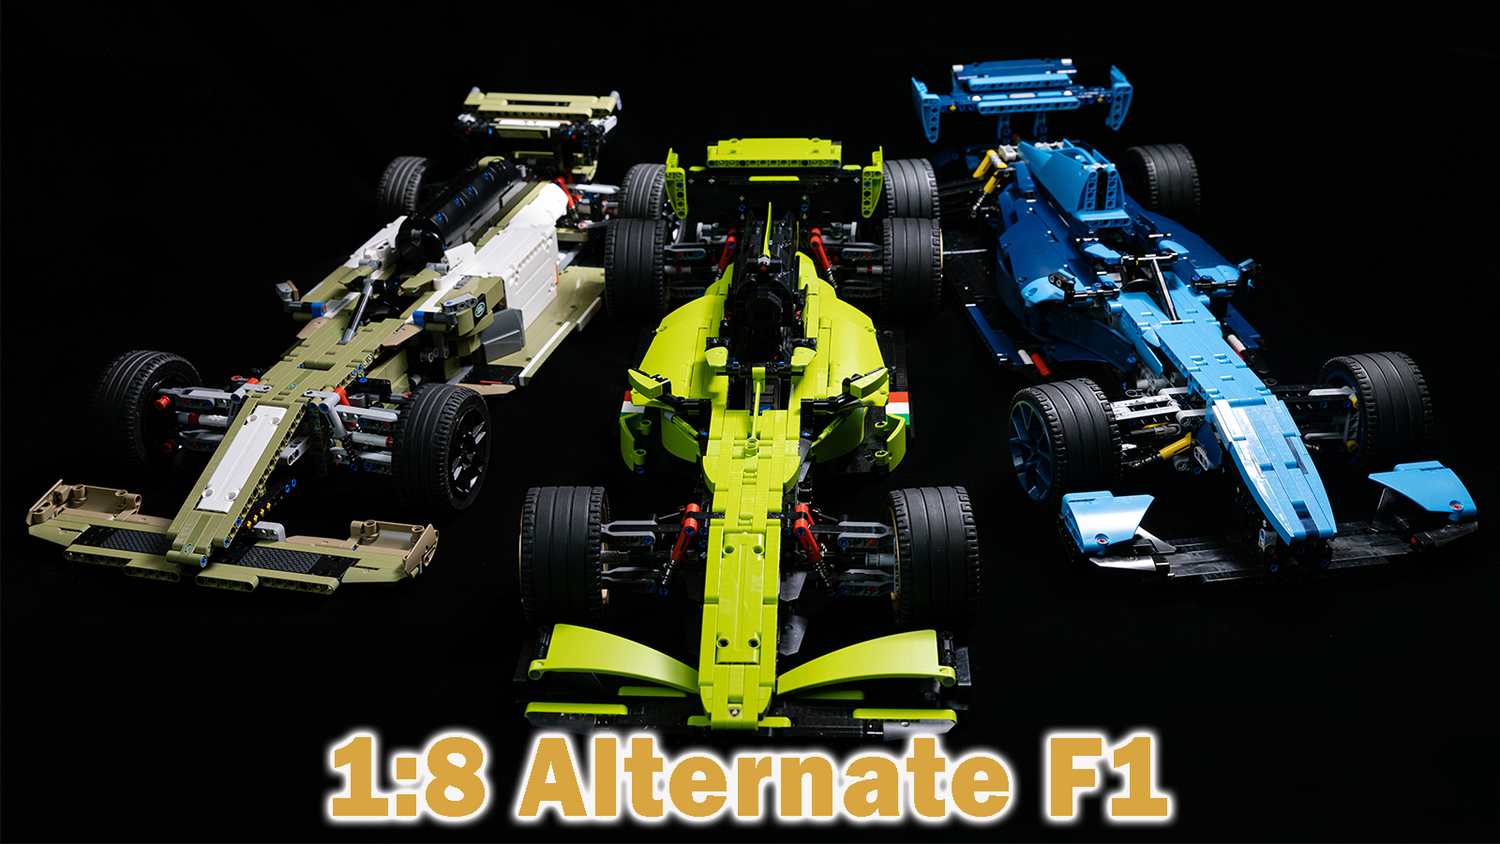 LEGO Technic 1:8 Alternate F1 series